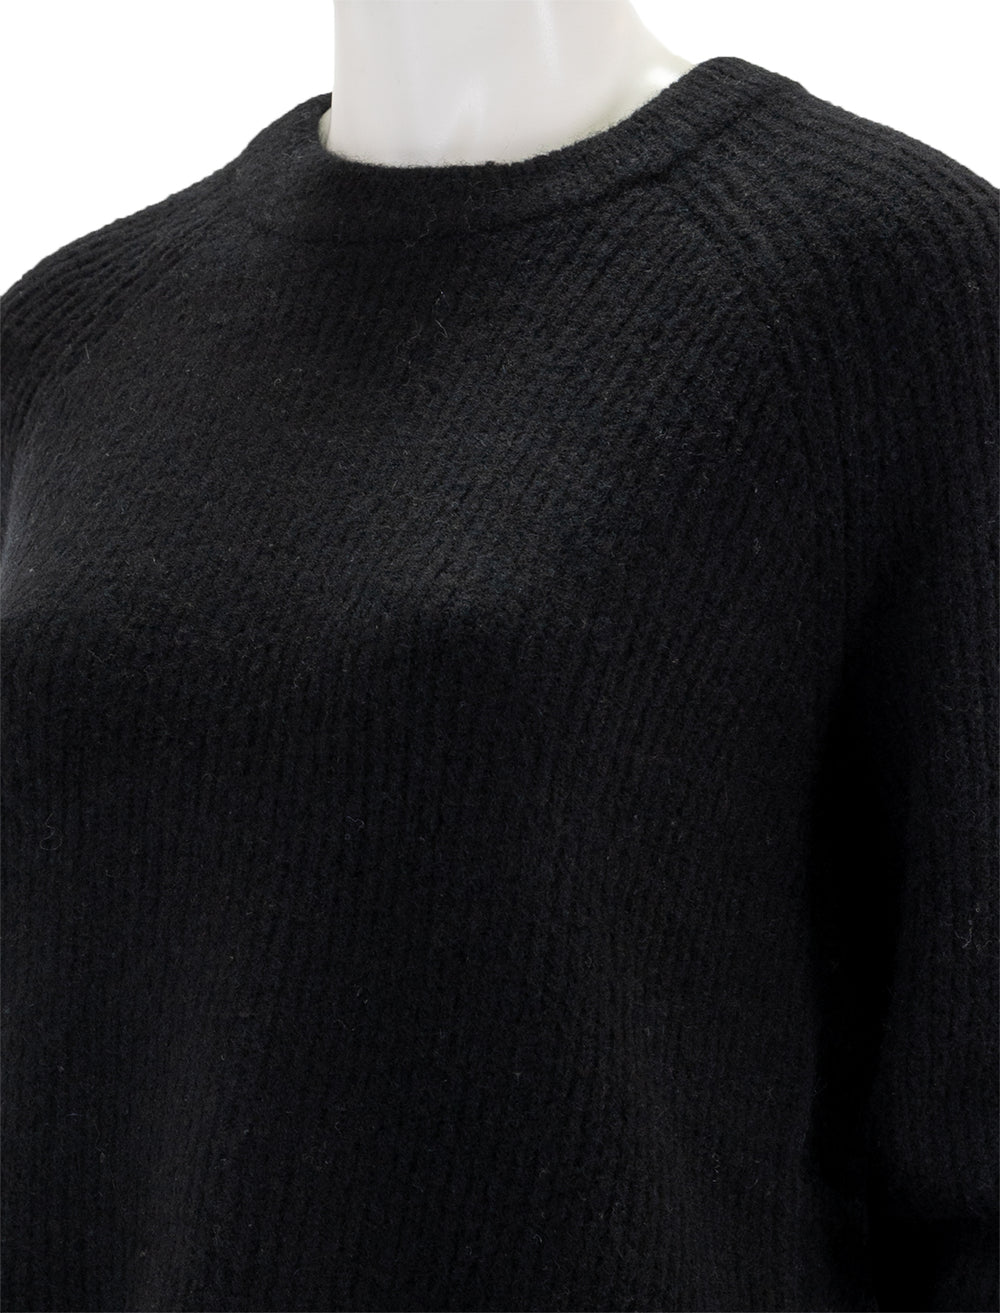 Close-up view of Velvet's gigi pullover in black.